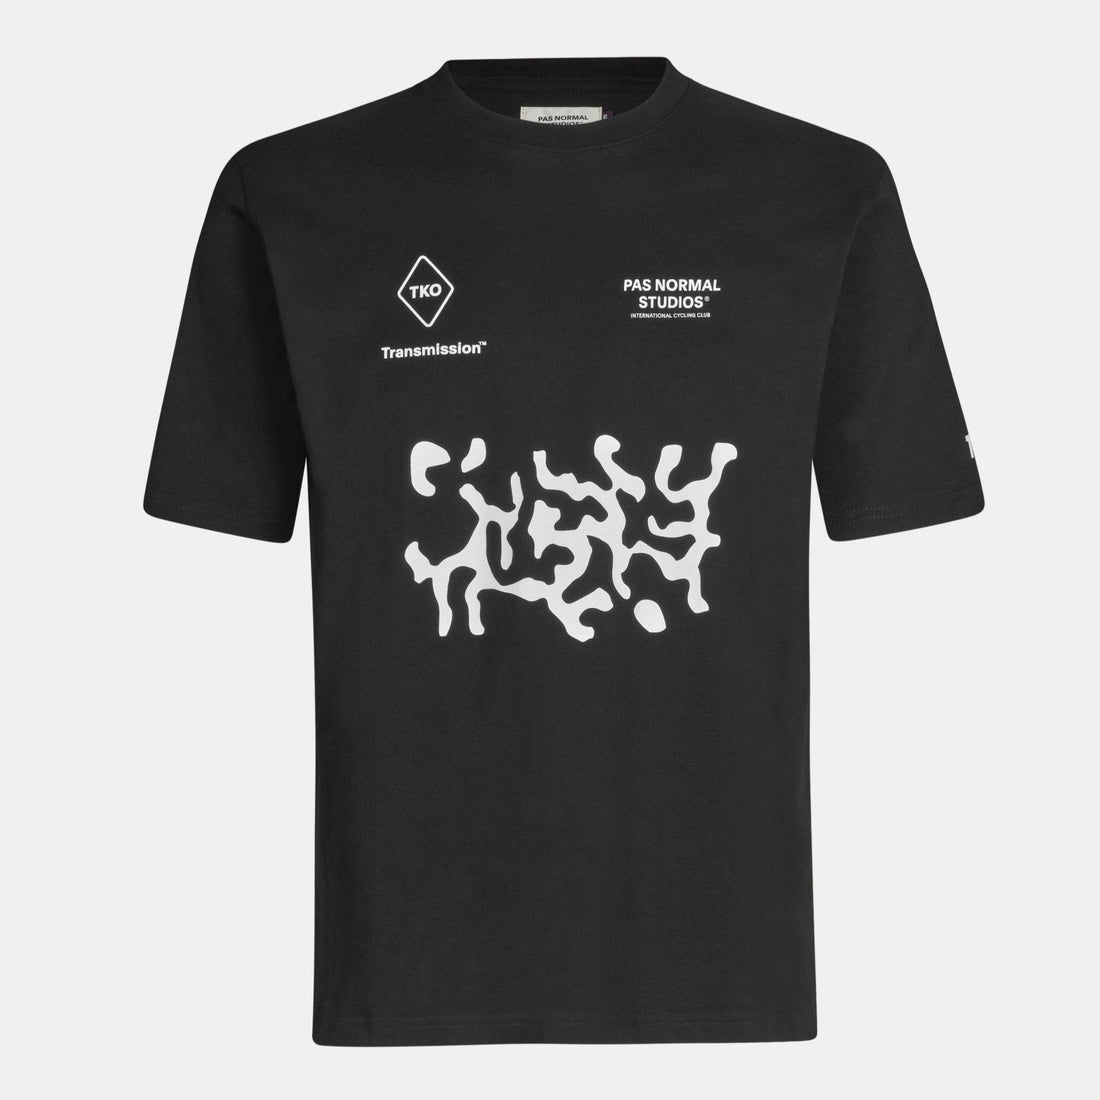 Off-Race T.K.O. Transmission T-shirt - Black